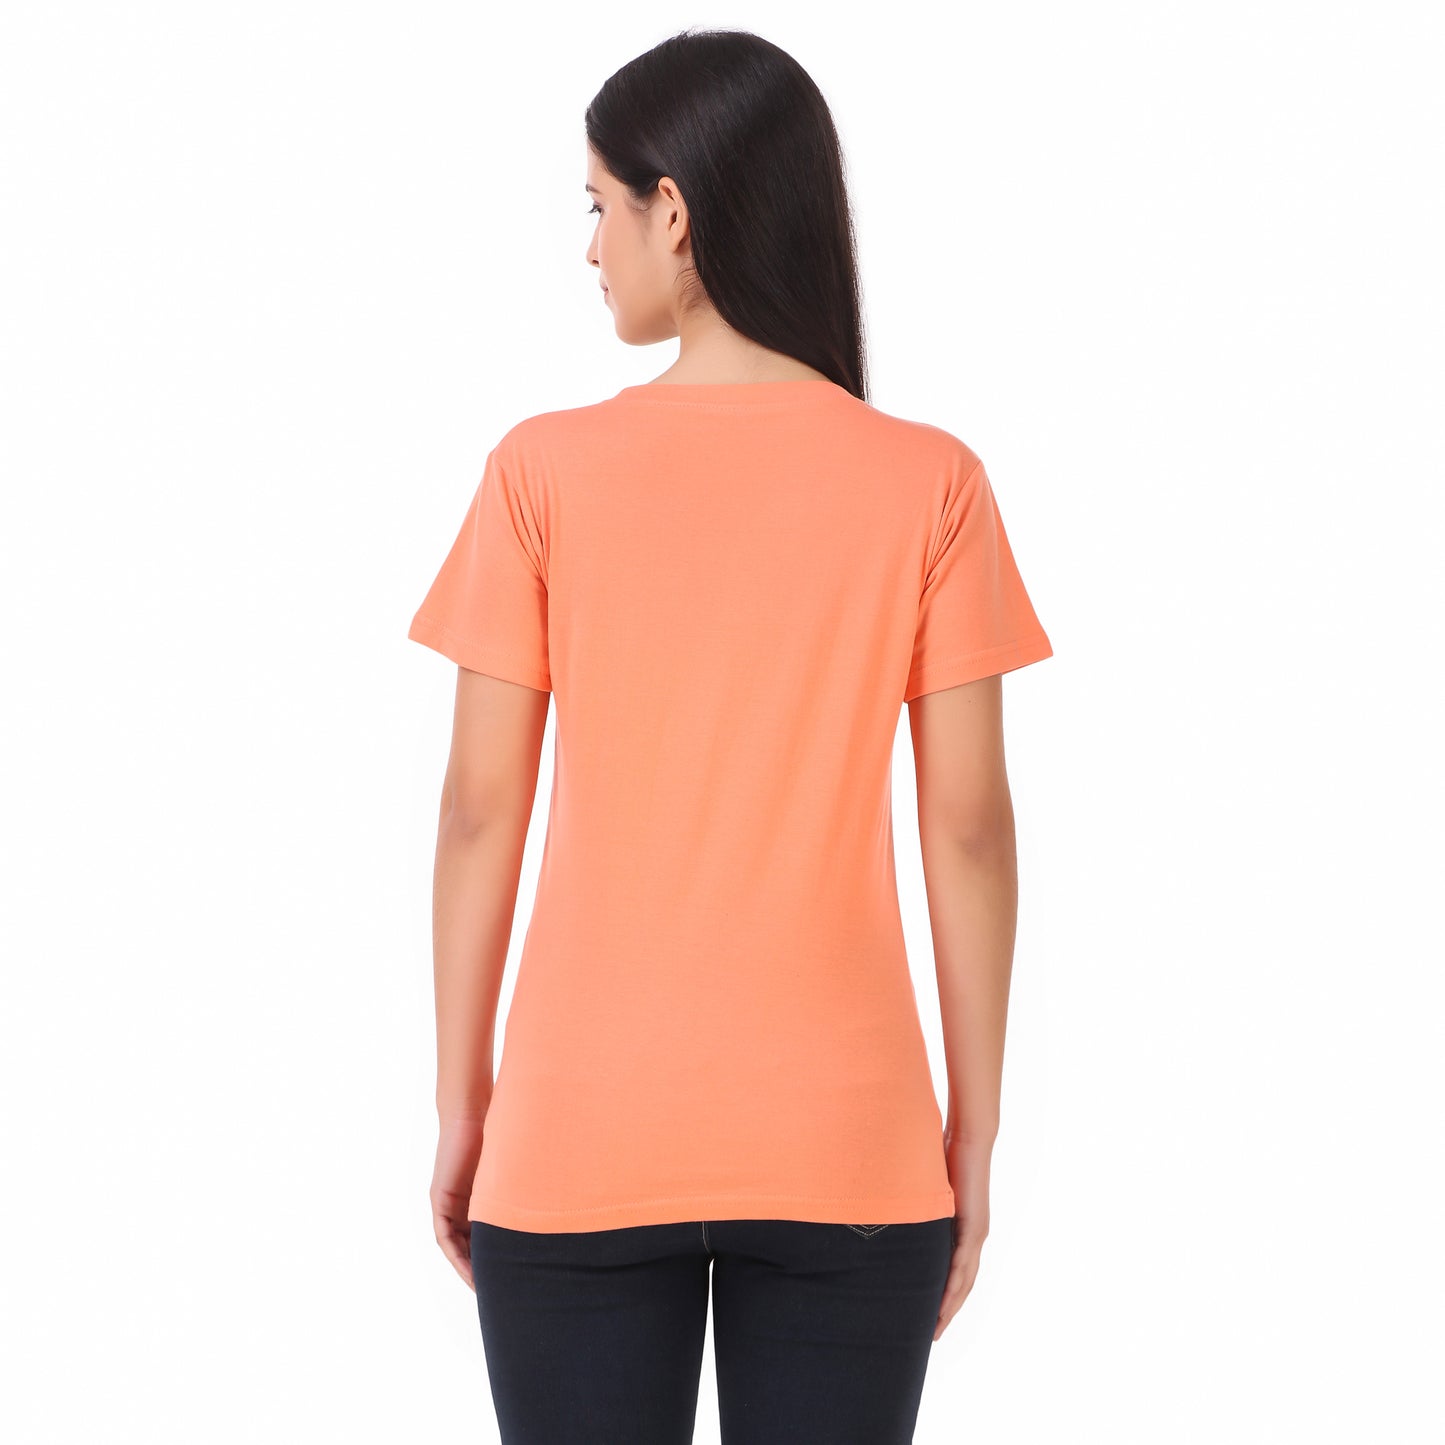 Grey Tree & Peach Tree Print Combo ( 2 Tops) Trendy T Shirt!!